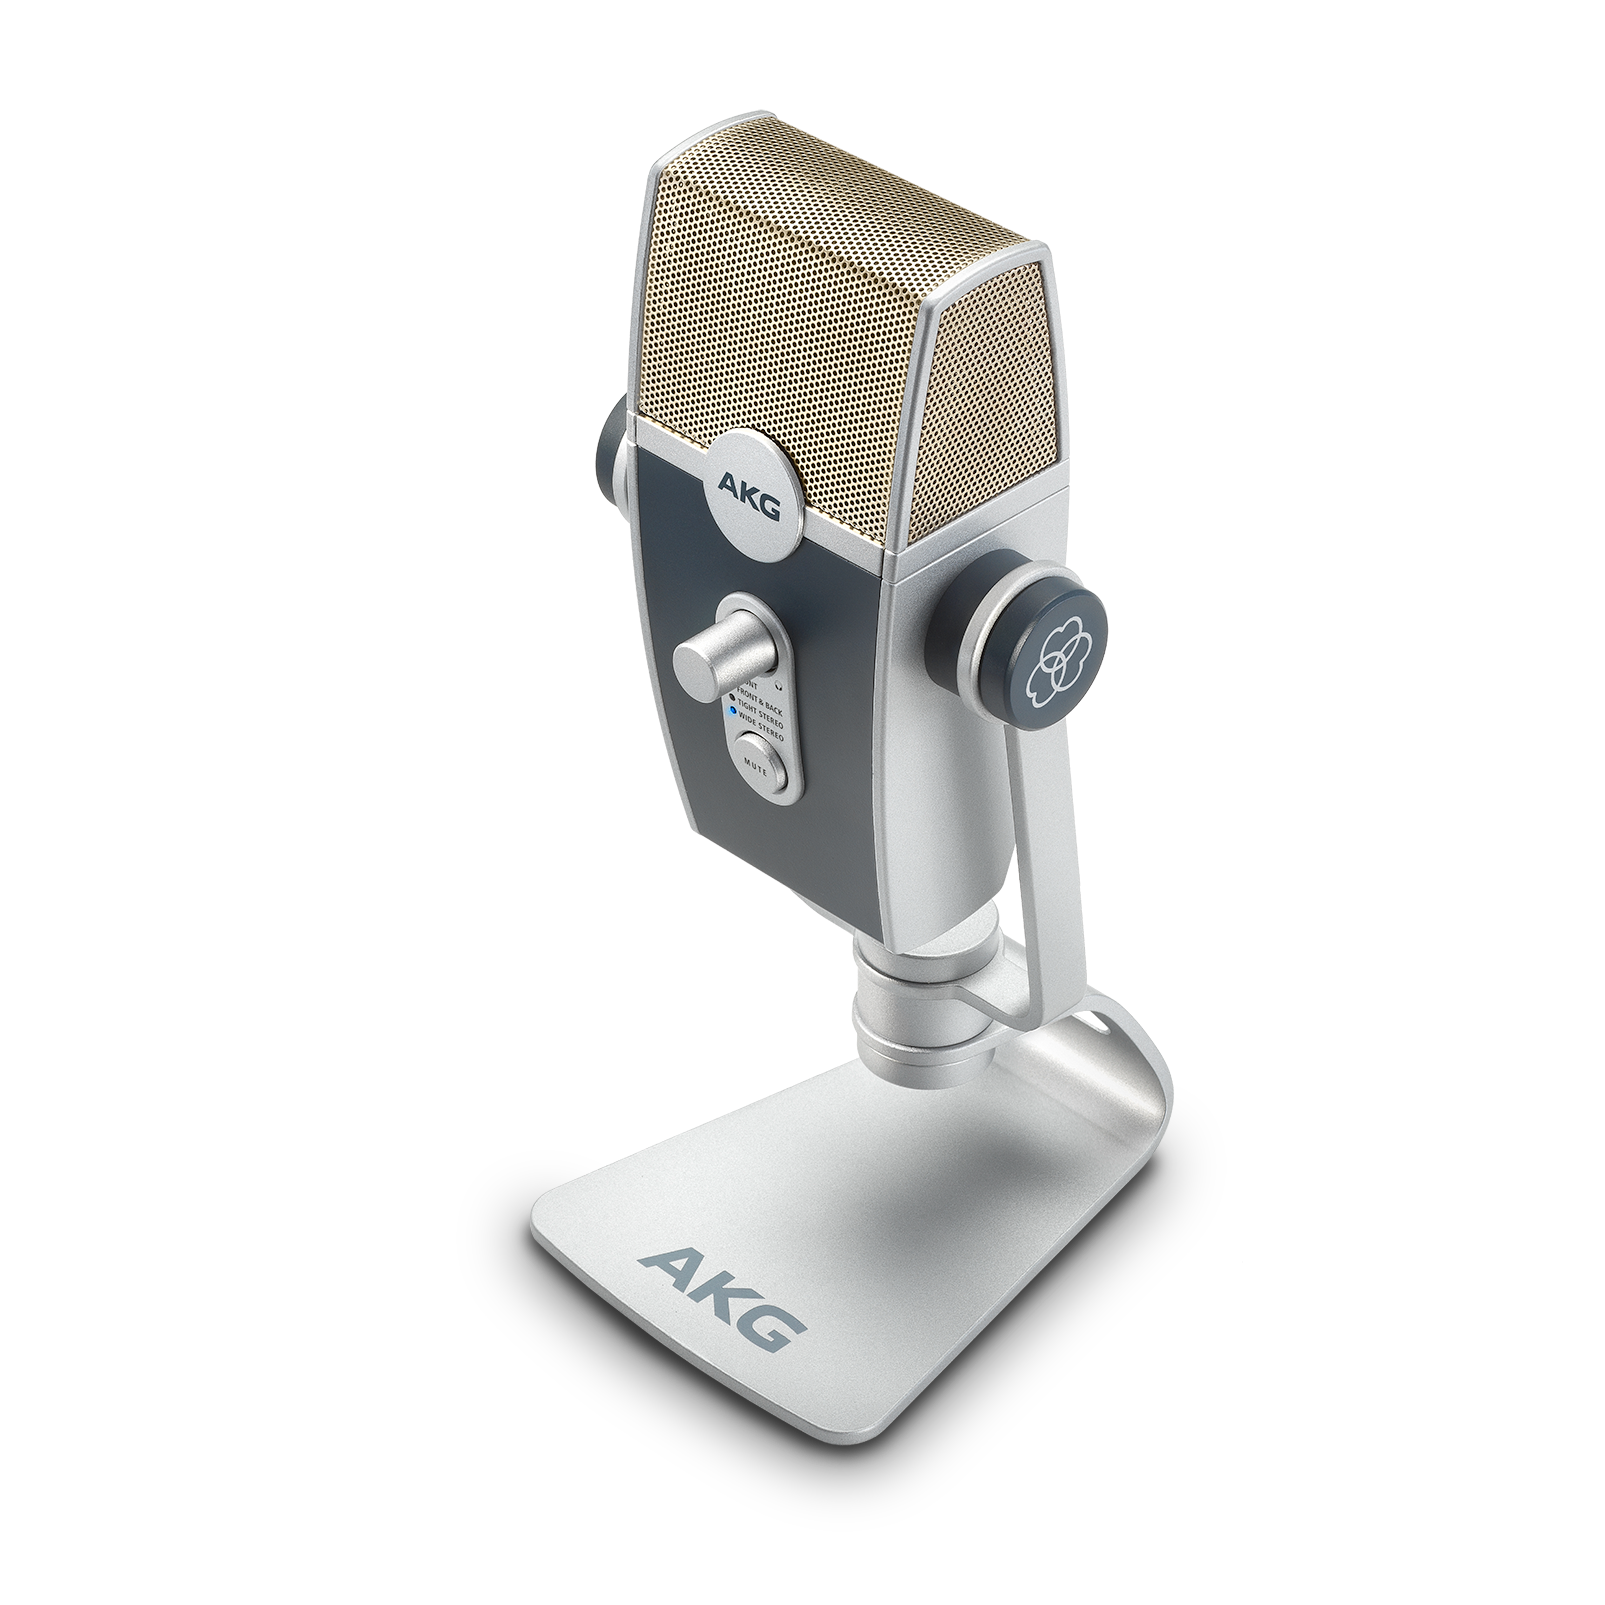 AKG Lyra (B-Stock) - Silver - Ultra-HD Multimode USB Microphone  - Detailshot 3